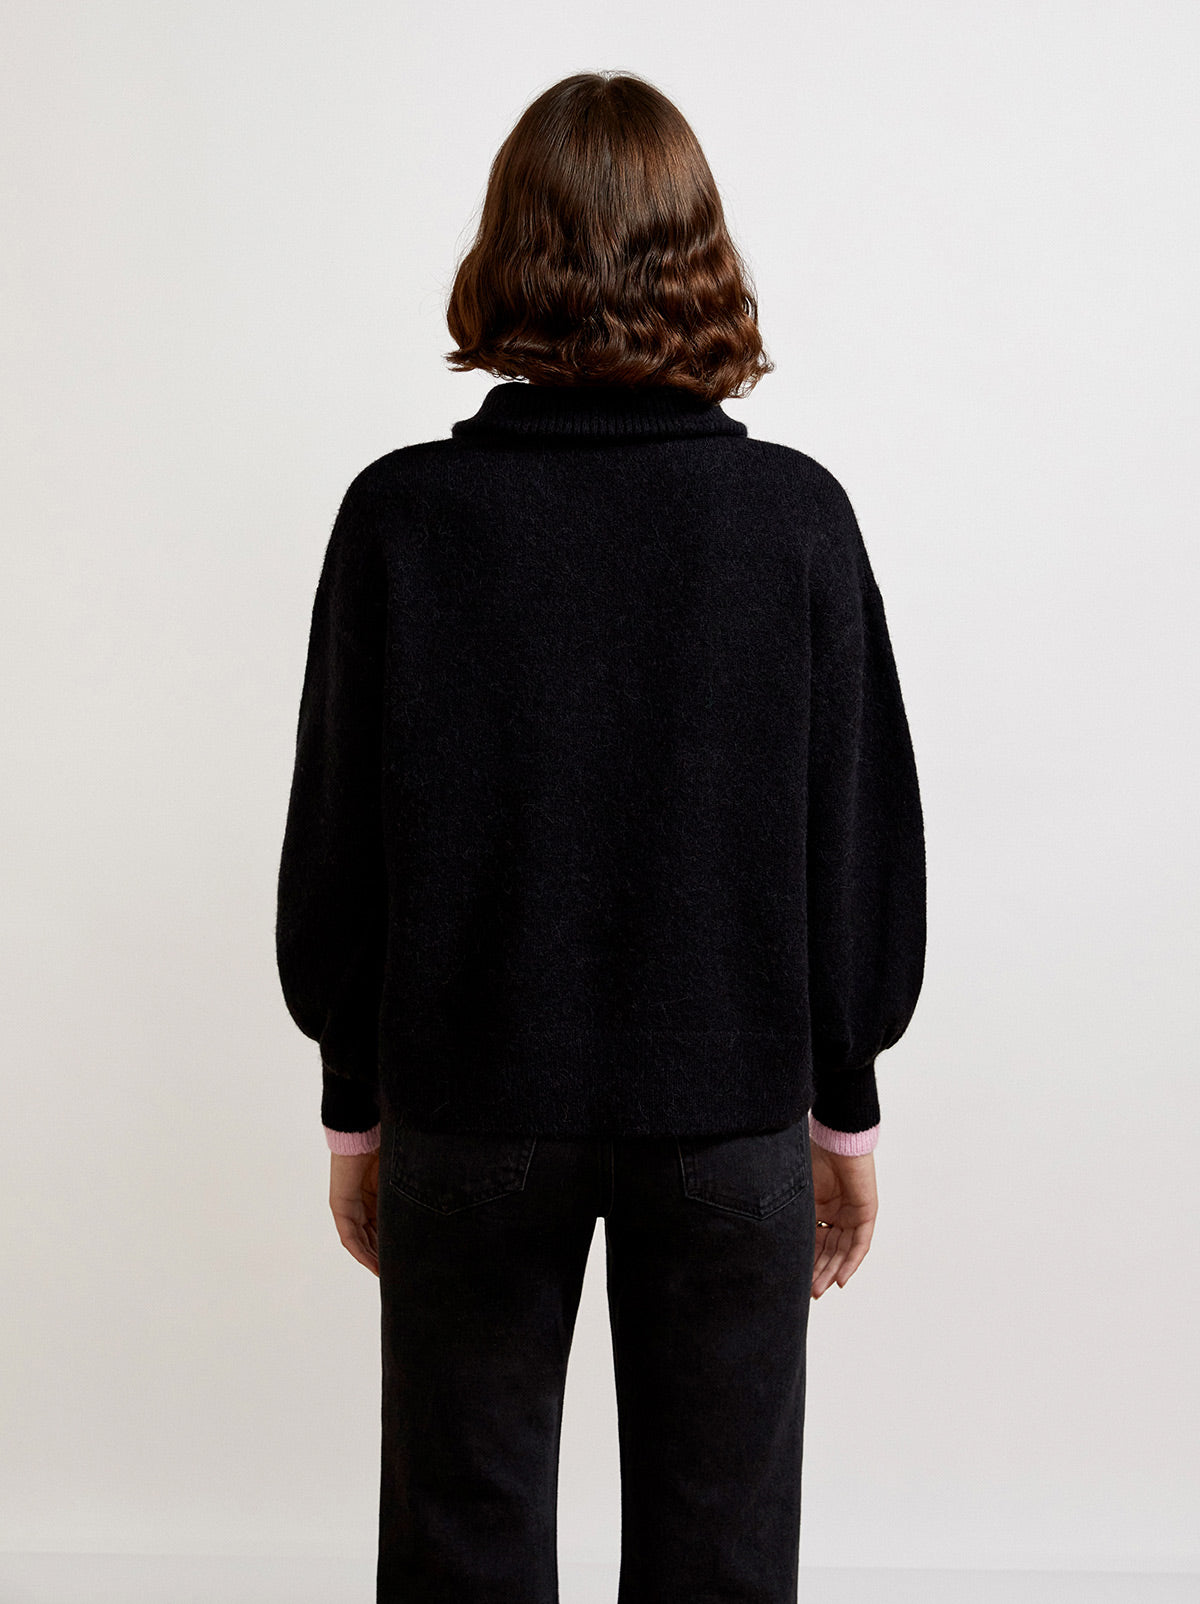 Lorna Black Alpaca Blend Zip Collar Sweater by KITRI Studio